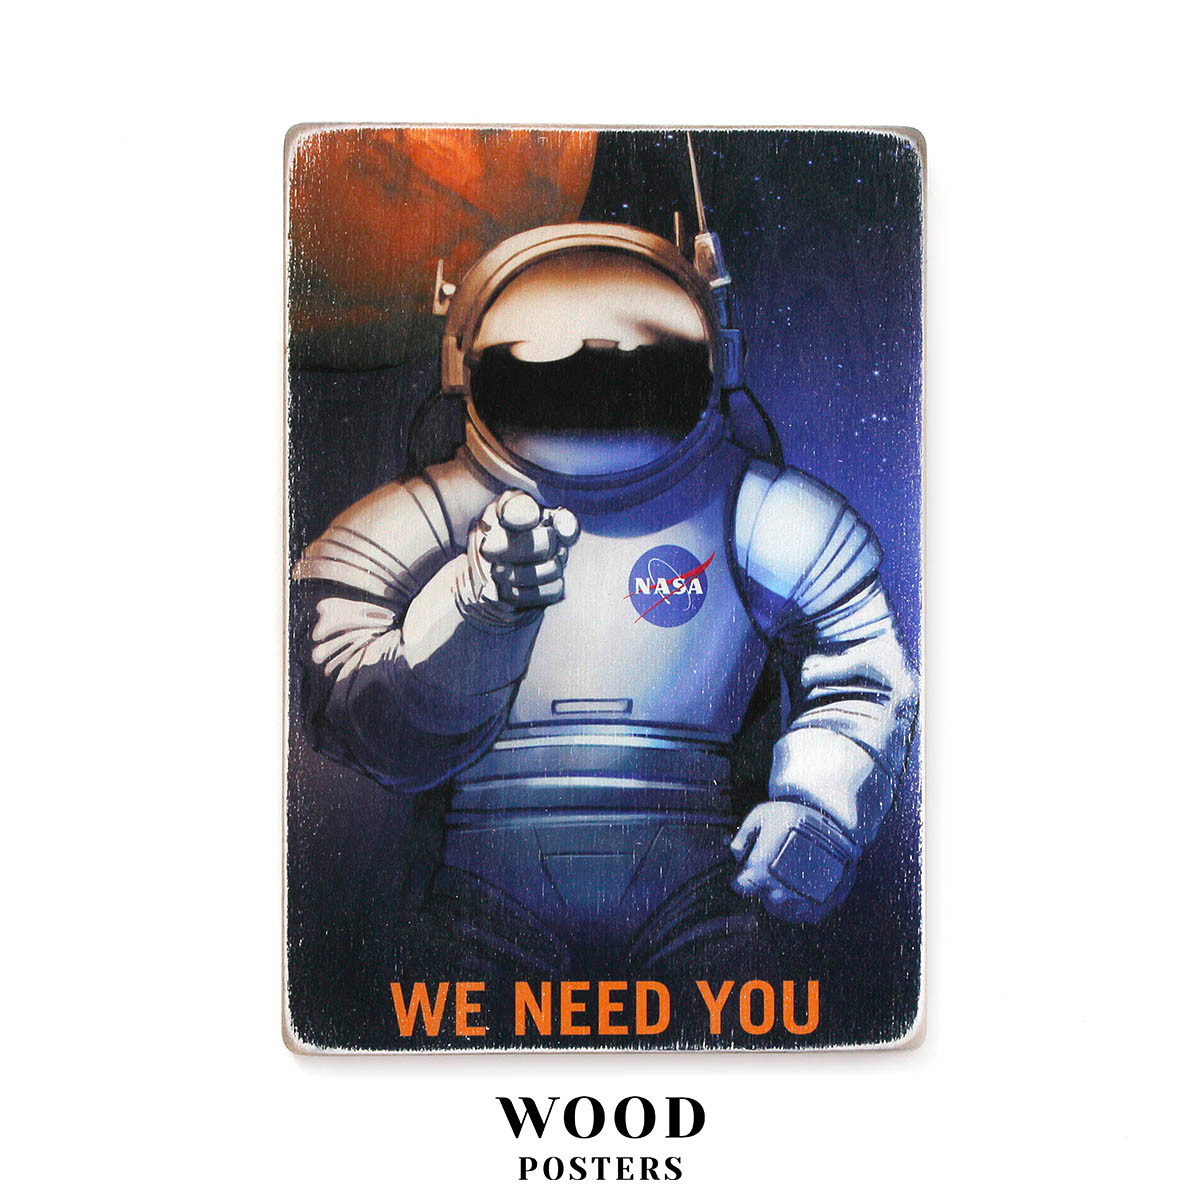 NASA needs you